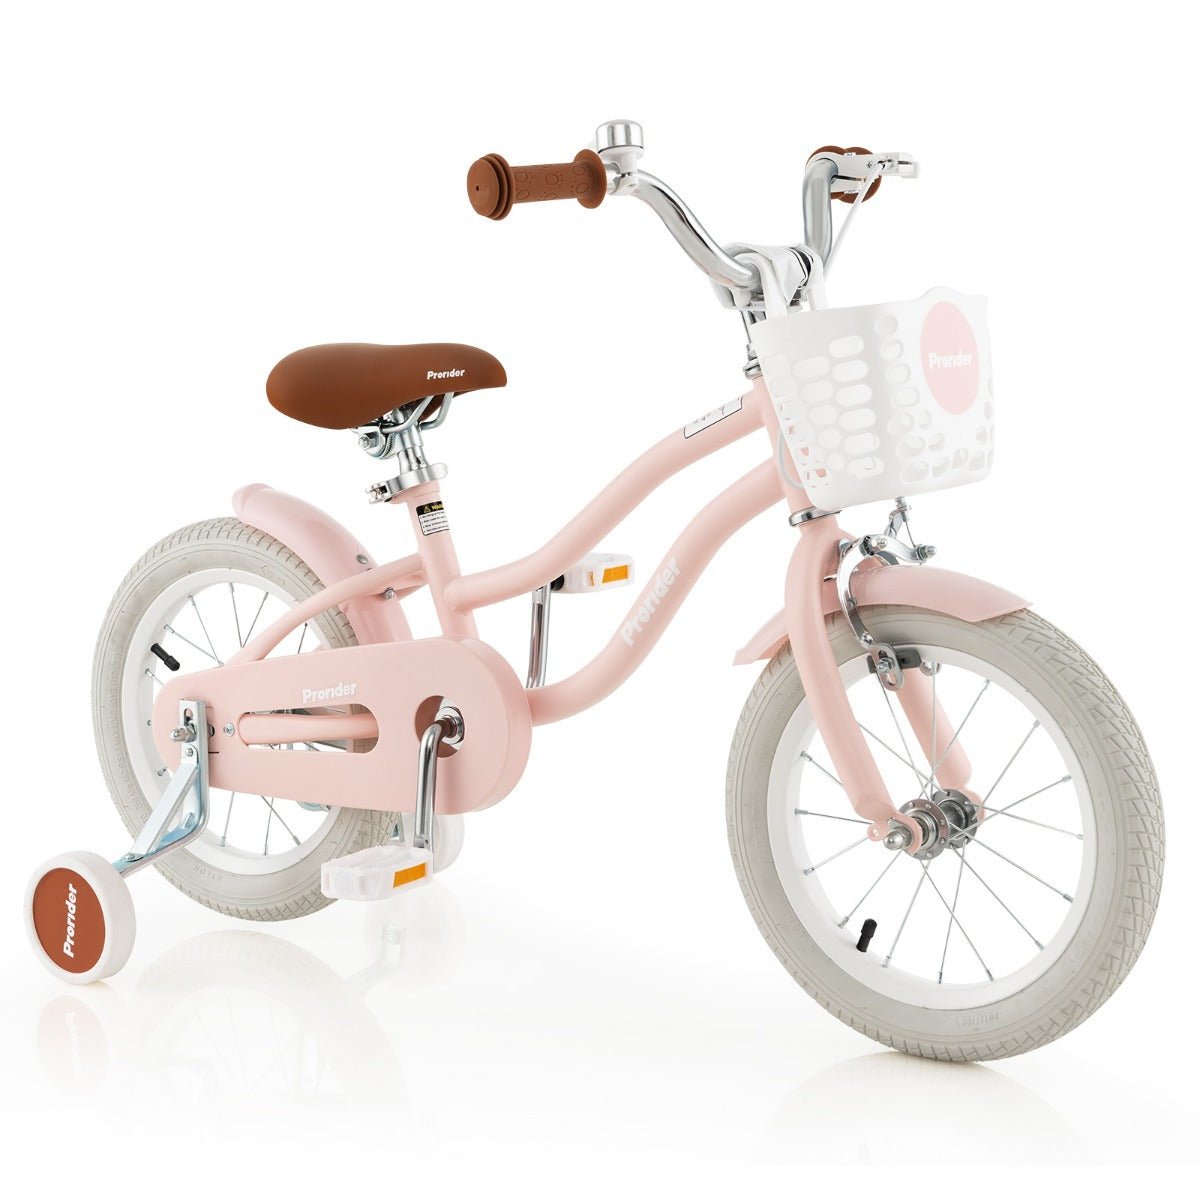 Pink Kid's Bike with Handbrake - 36, 40, or 46 cm Sizes